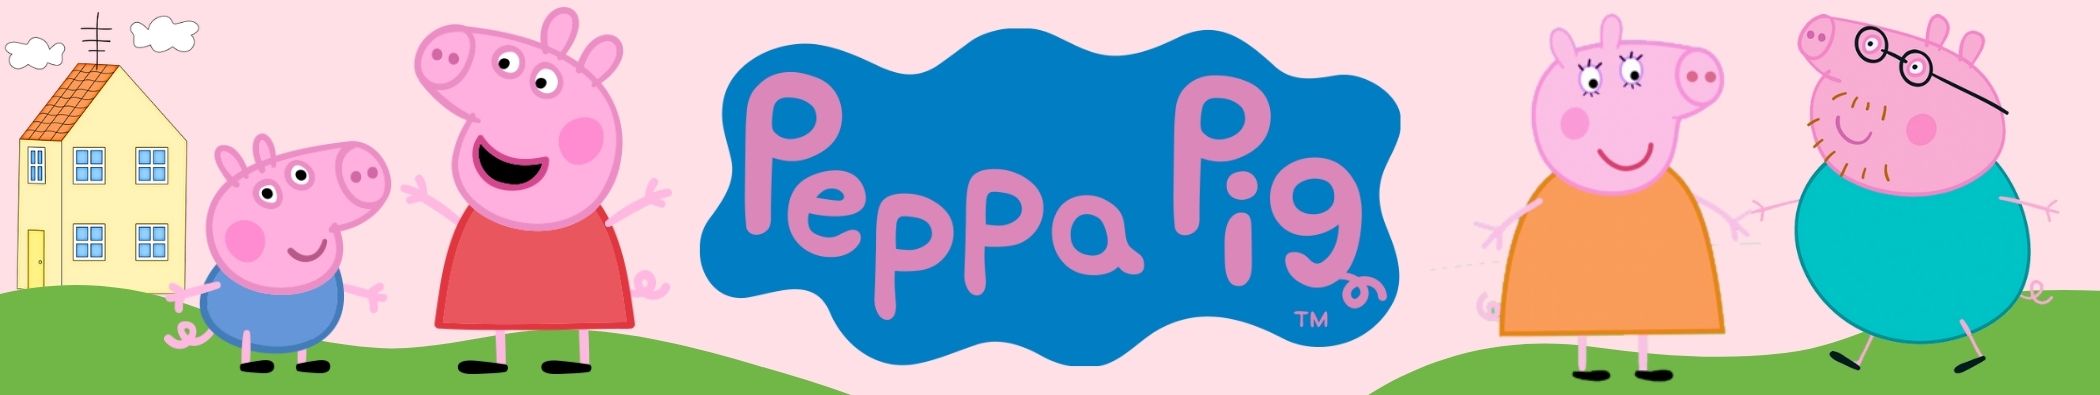 Juguetes Peppa Pig